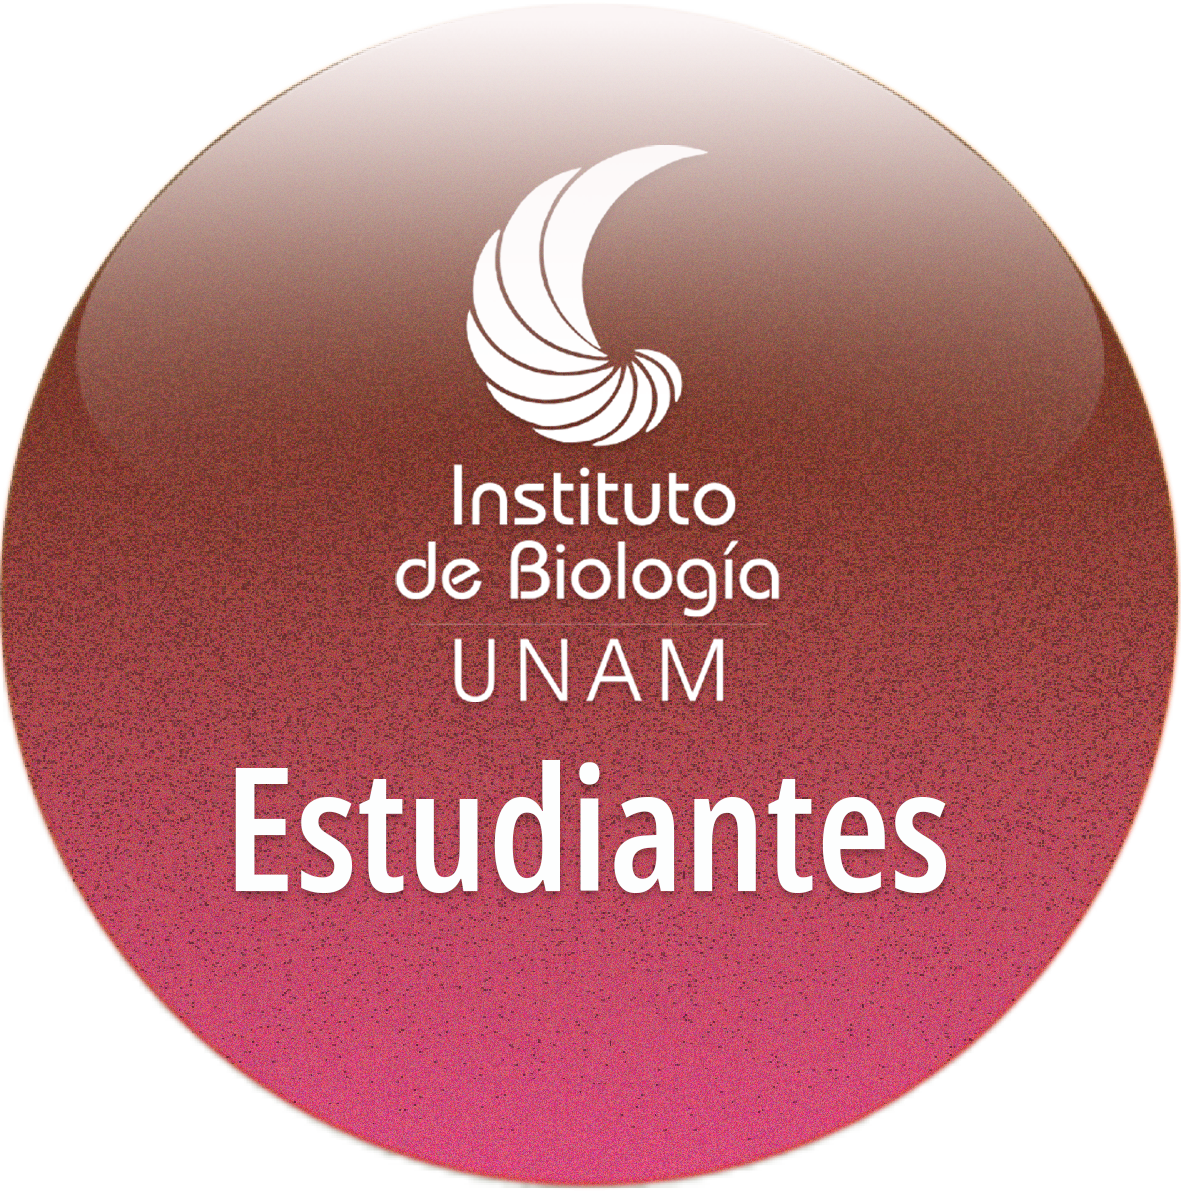 Estudiantes del IBUNAM - Instituto de Biología, UNAM